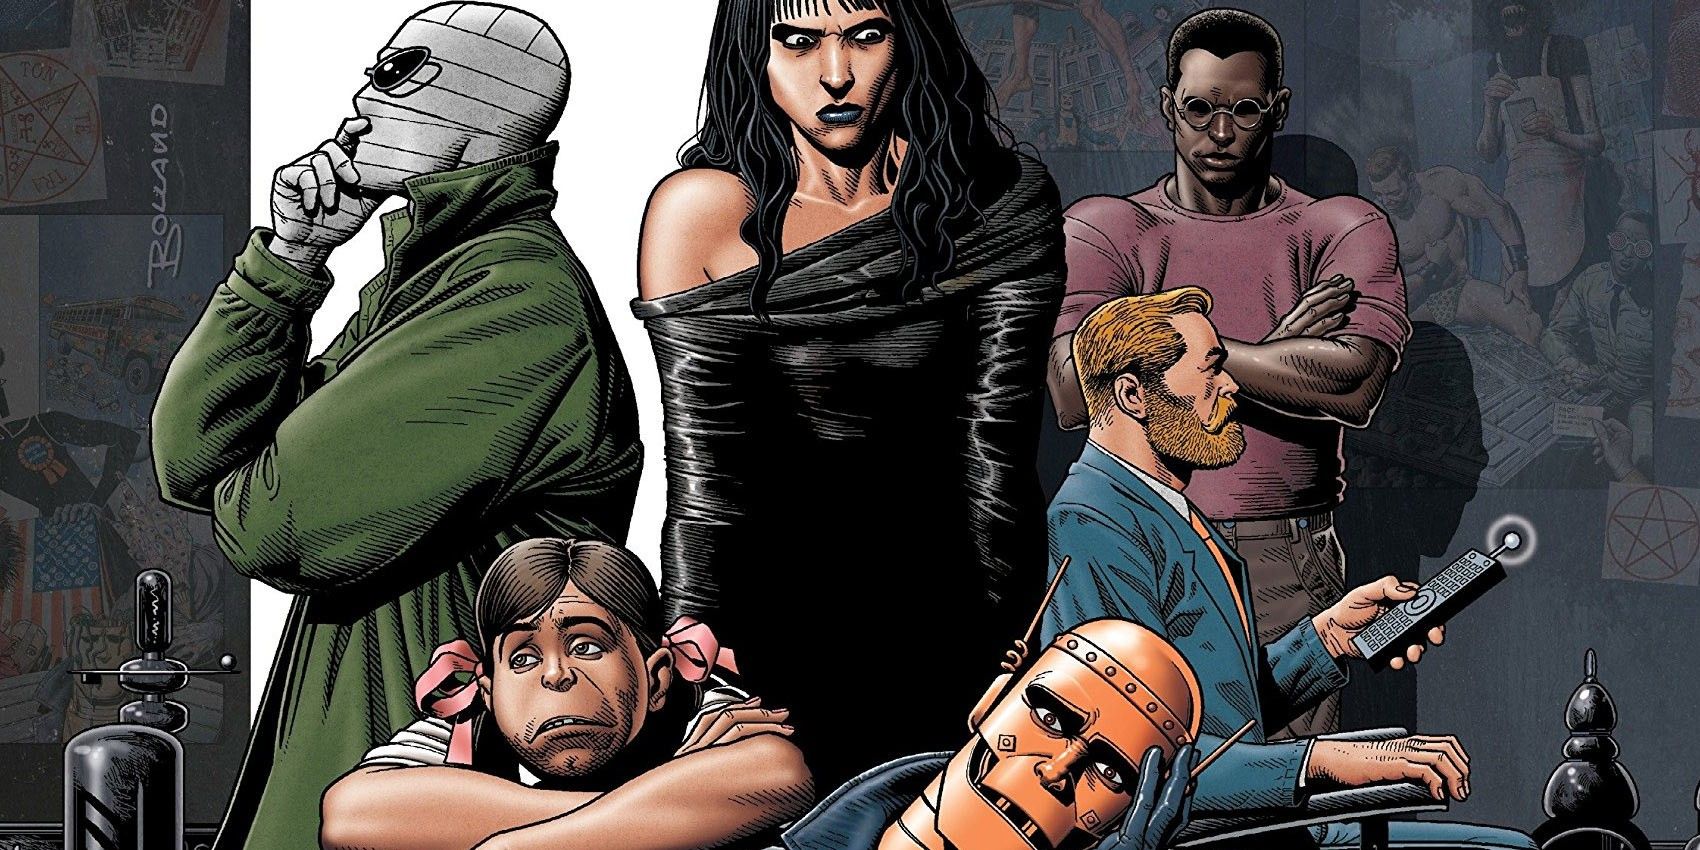 Six members of Doom Patrol, a DC superhero team.